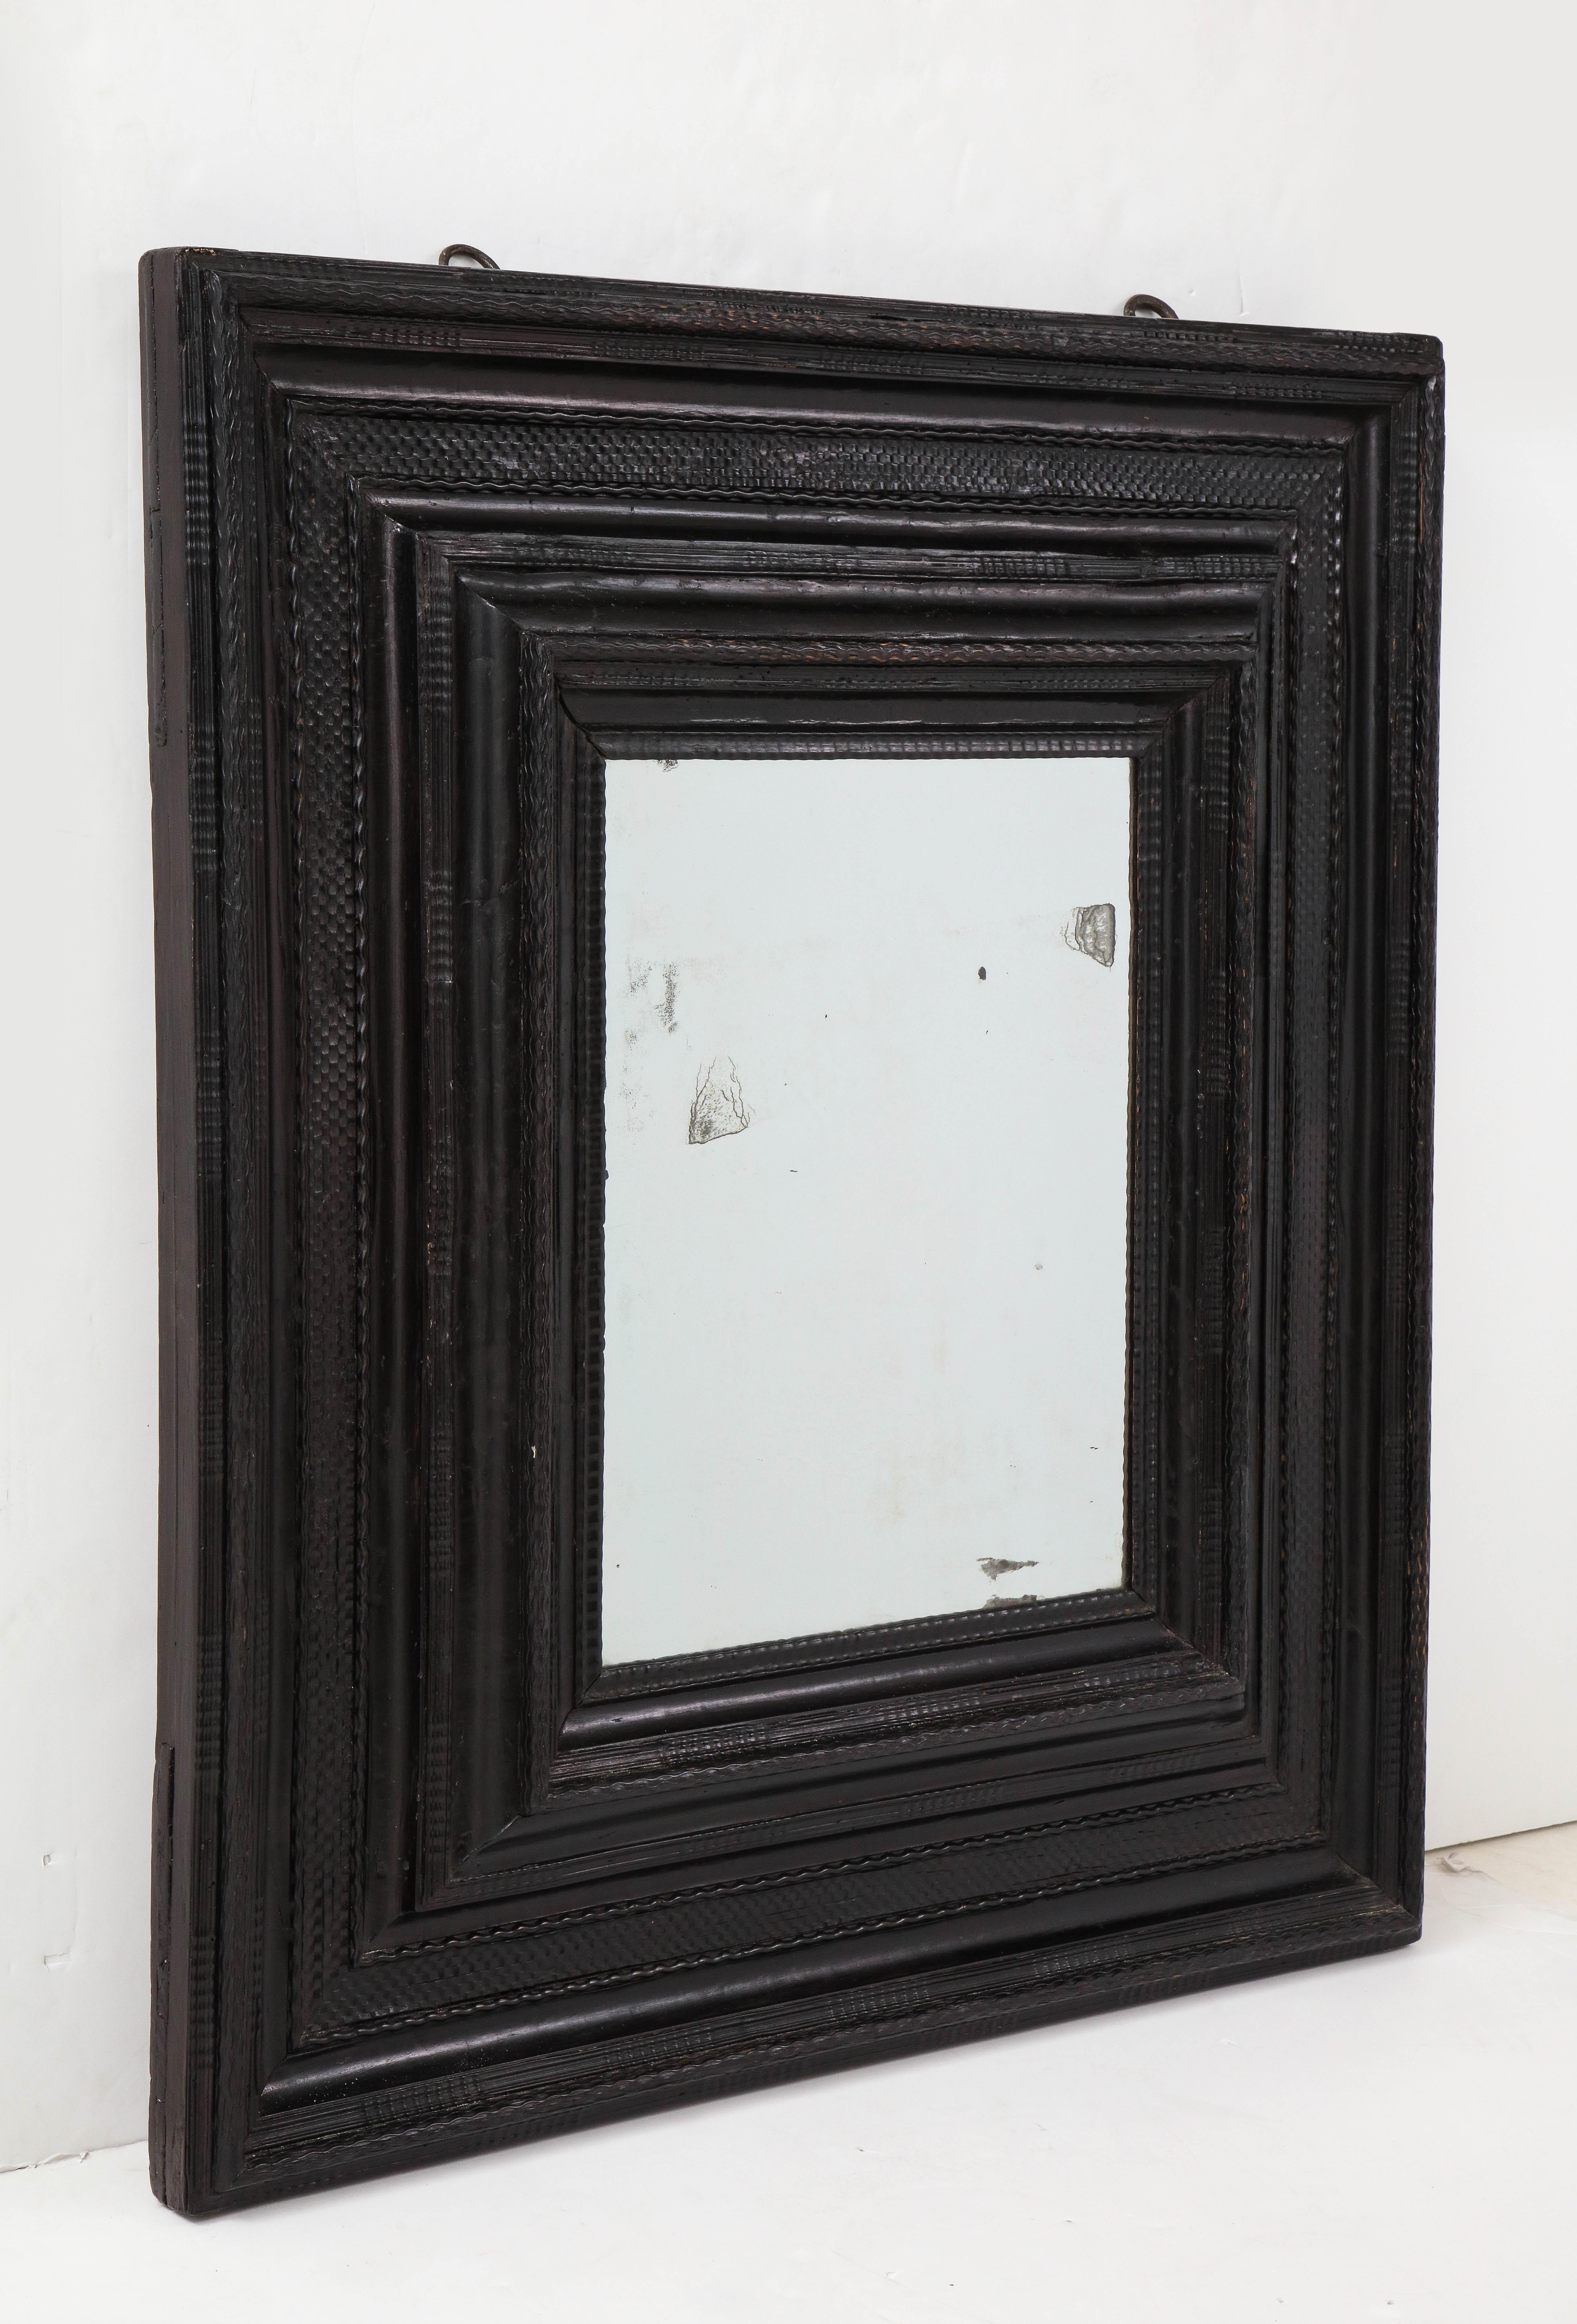 Large 17th C Italian ebonized walnut guilloche mirror with original glass
Walnut, mirrored glass
Measures: H 47.5, W 41.5 in.